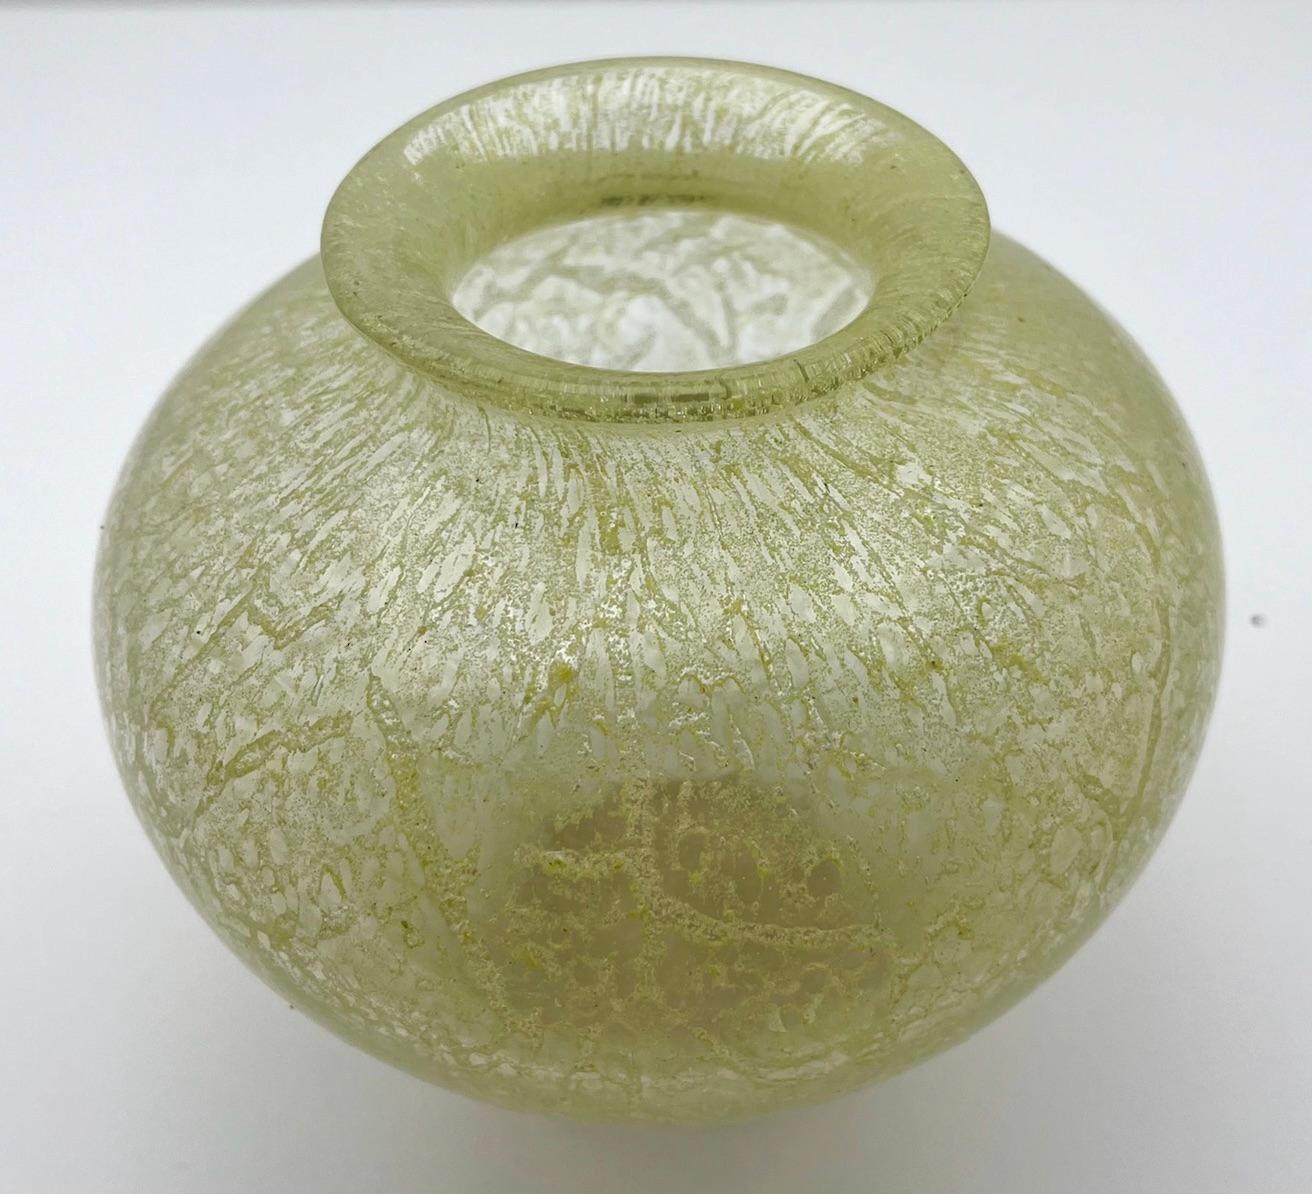 Art Deco Ikora Art Glass Vase, Produced, by WMF in Germany, 1930s by Karl Wiedmann For Sale